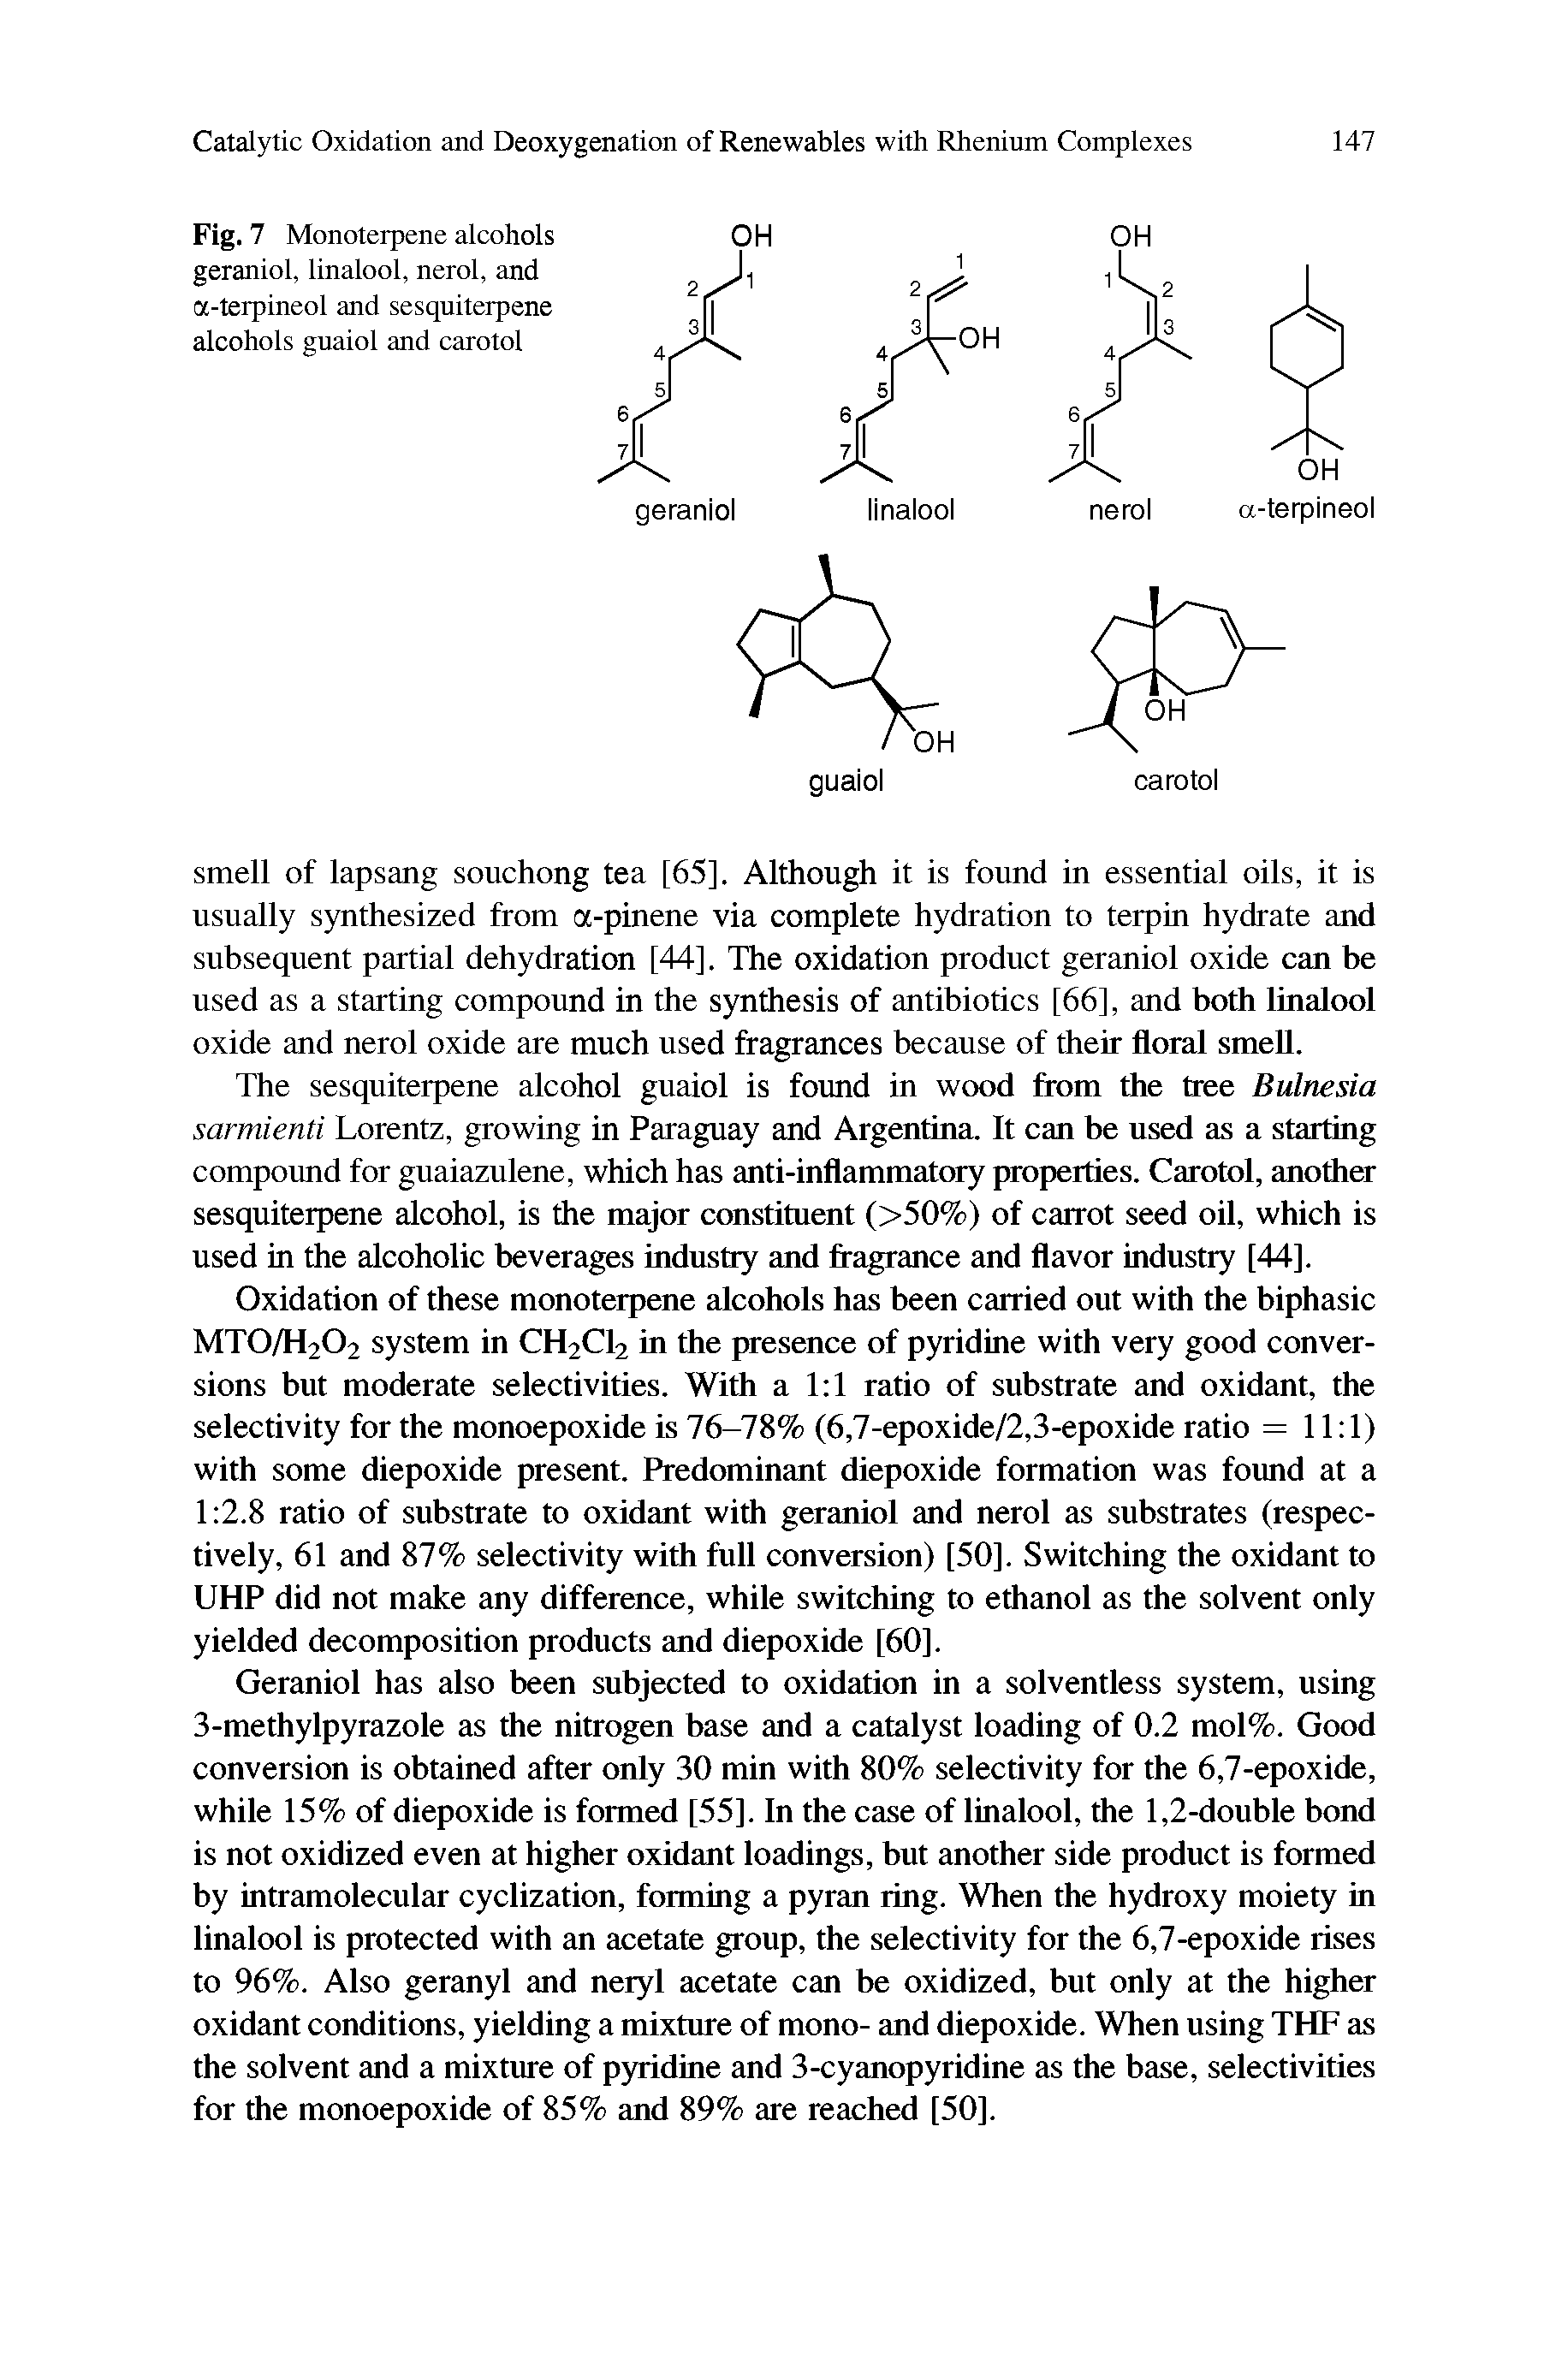 Fig. 7 Monoterpene alcohols geraniol, linalool, nerol, and a-terpineol and sesquiterpene alcohols guaiol and carotol...